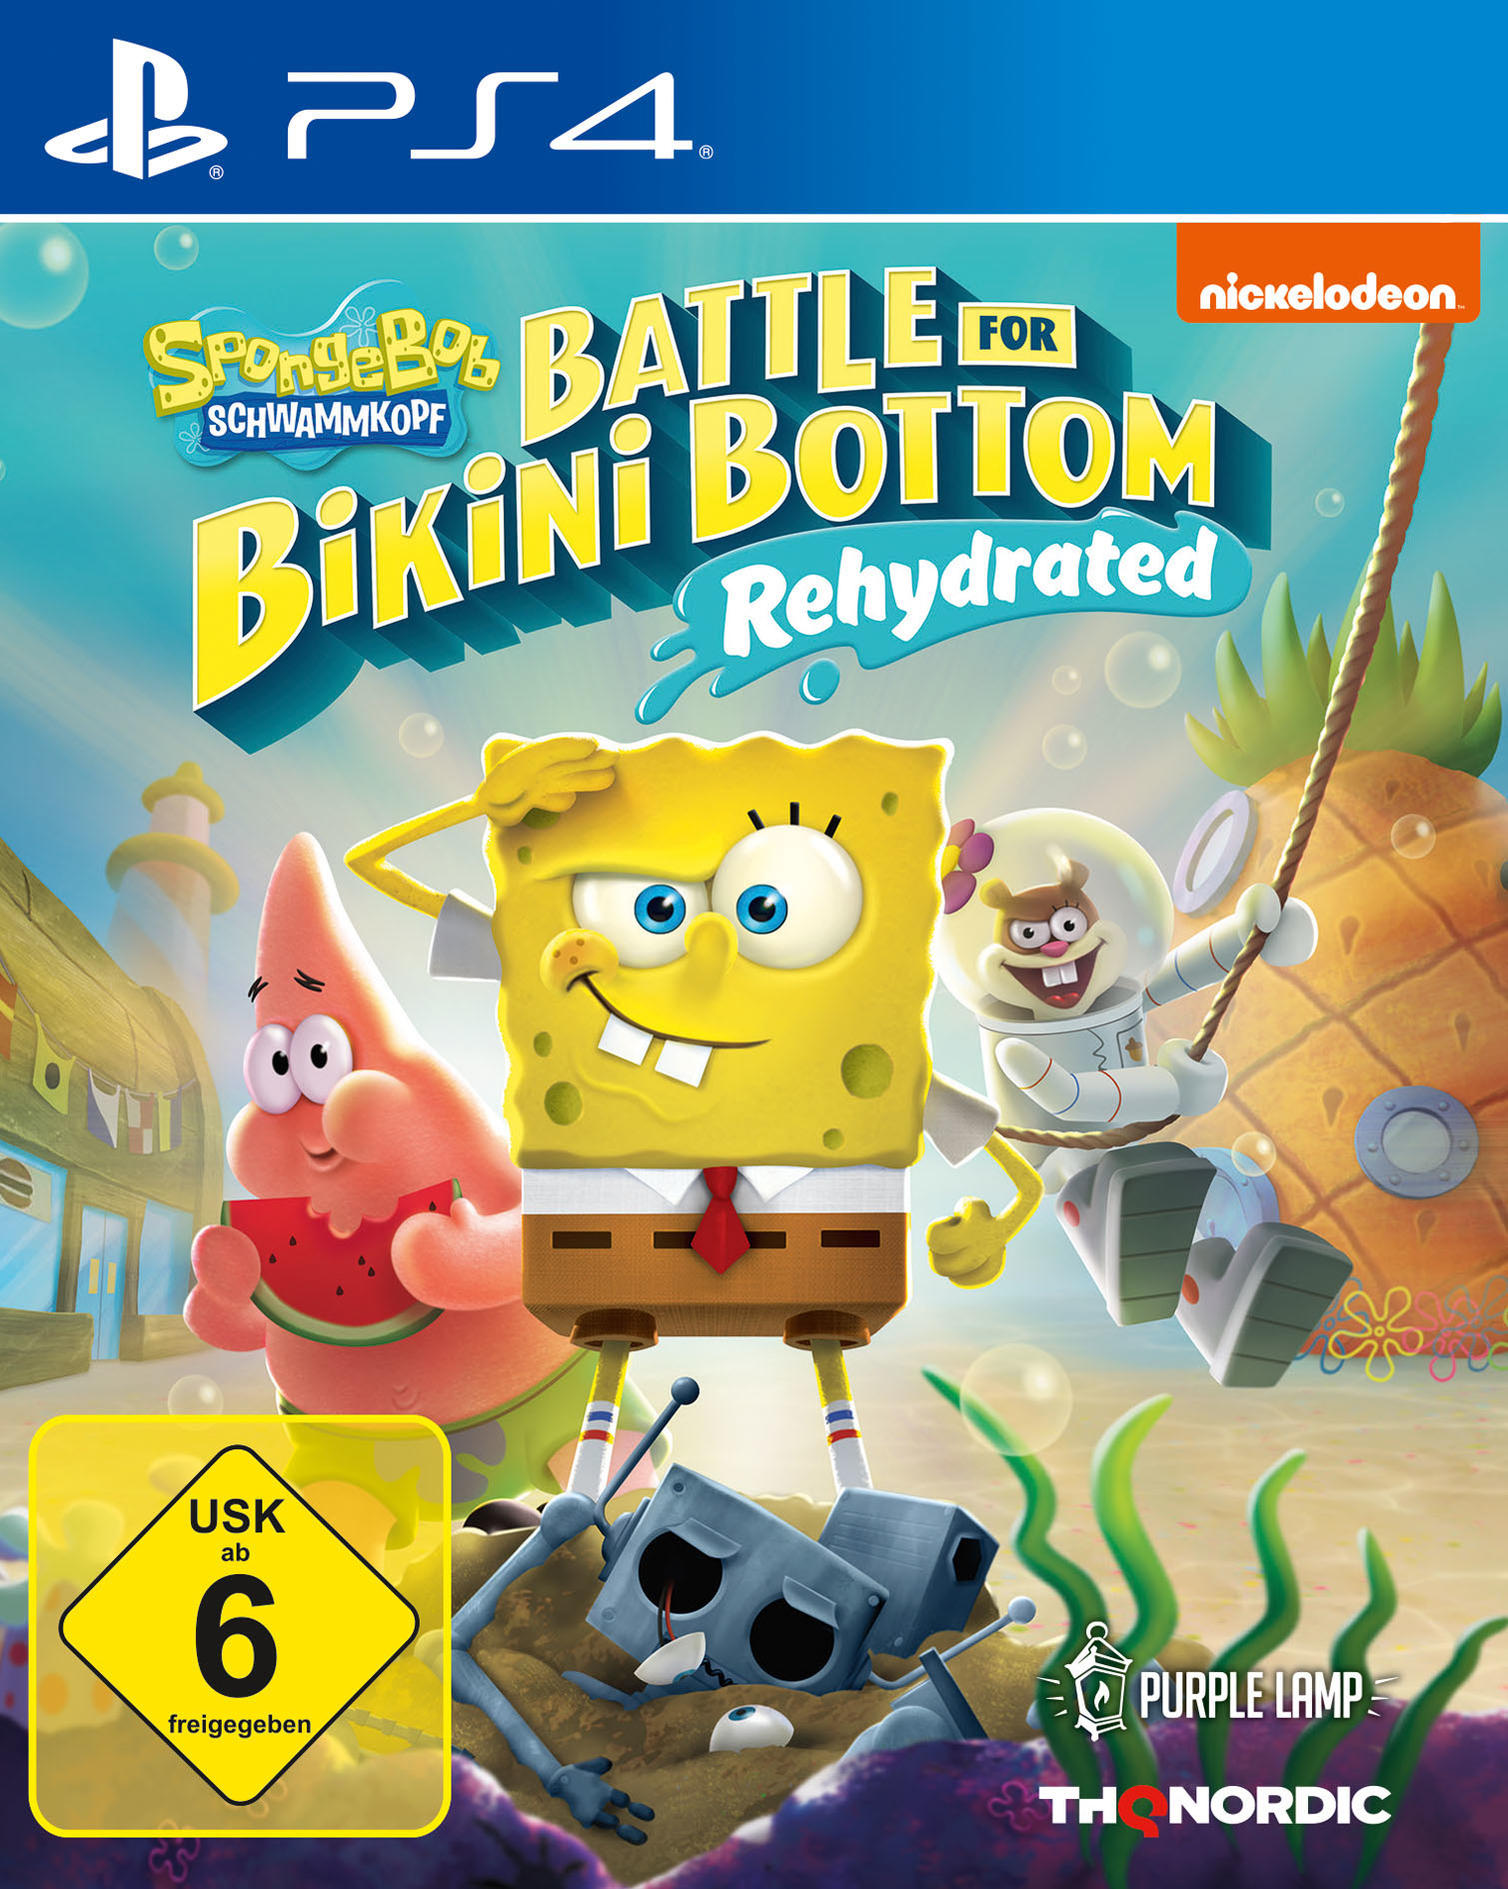 Spongebob Rehydrated - for Bottom [PlayStation Battle 4] - Bikini SquarePants: